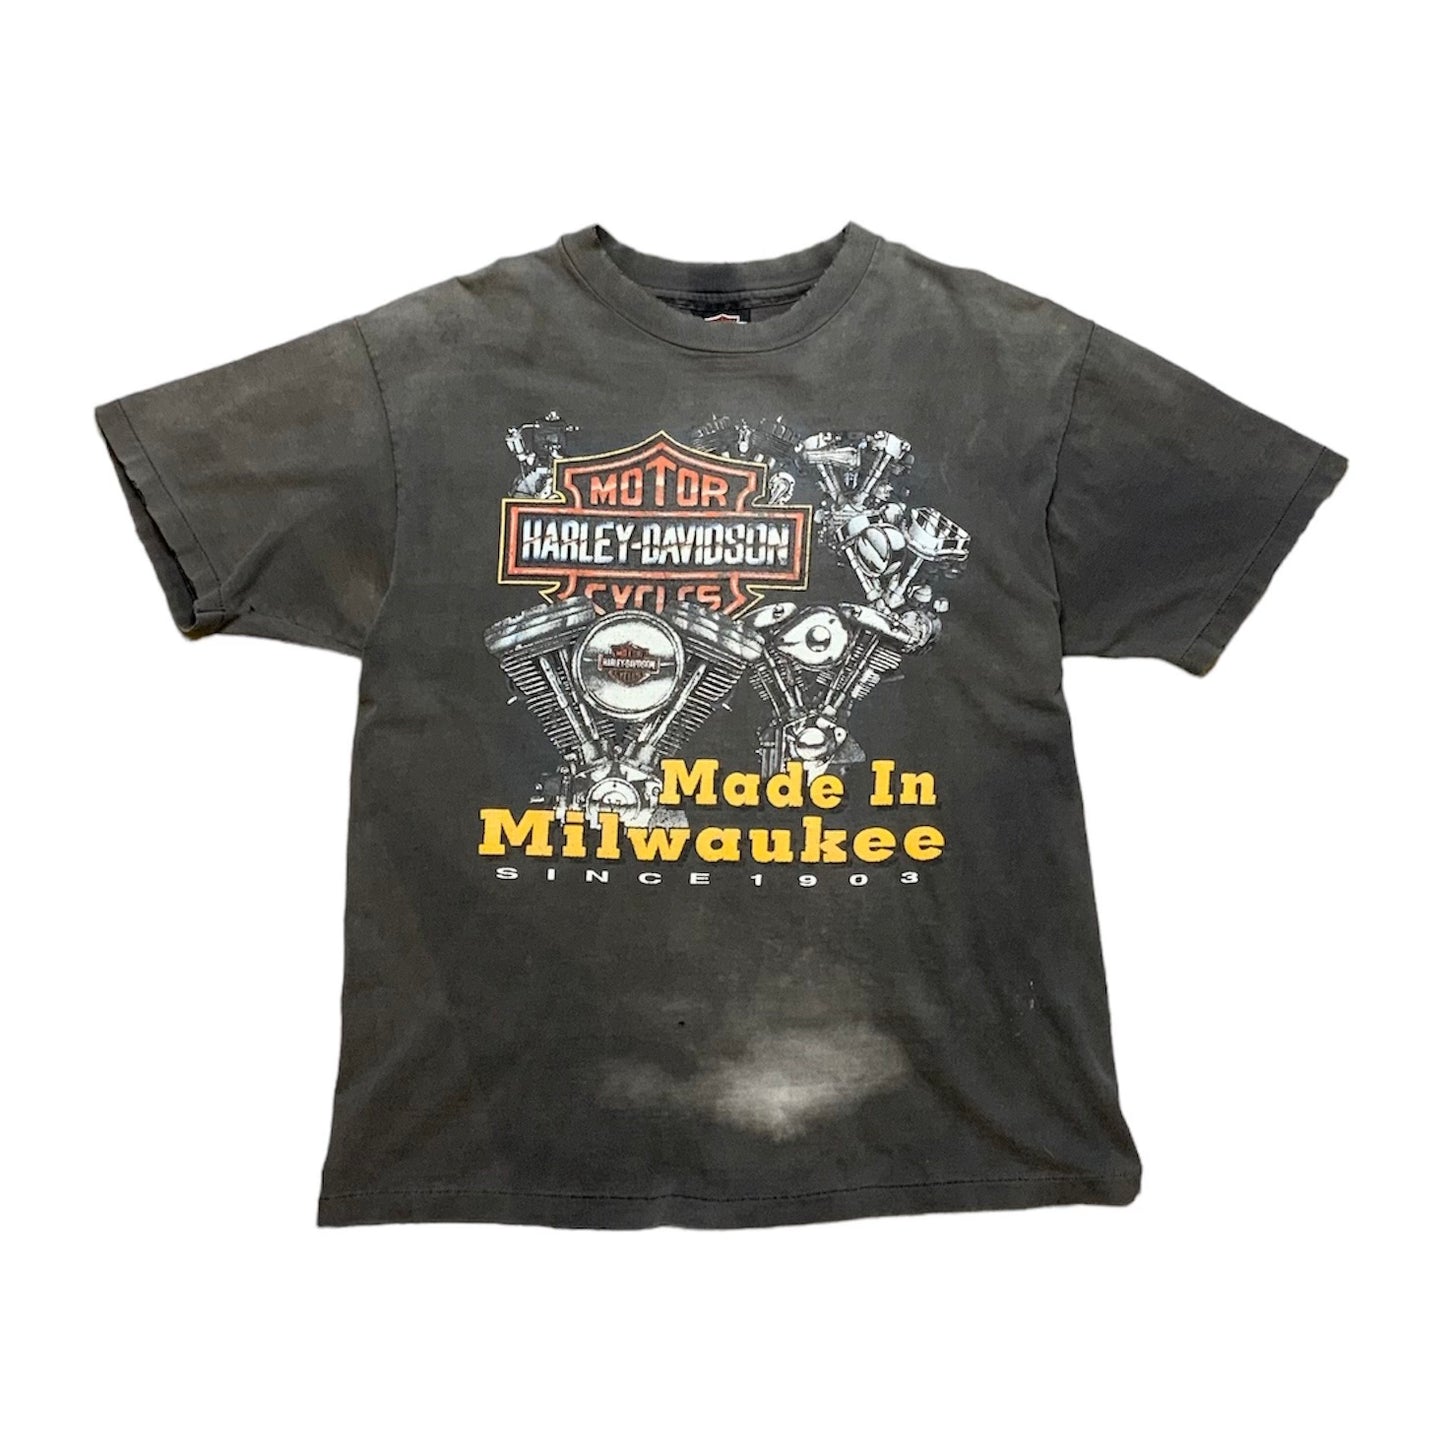 Harley Davidson Made in Milwaukee T-Shirt